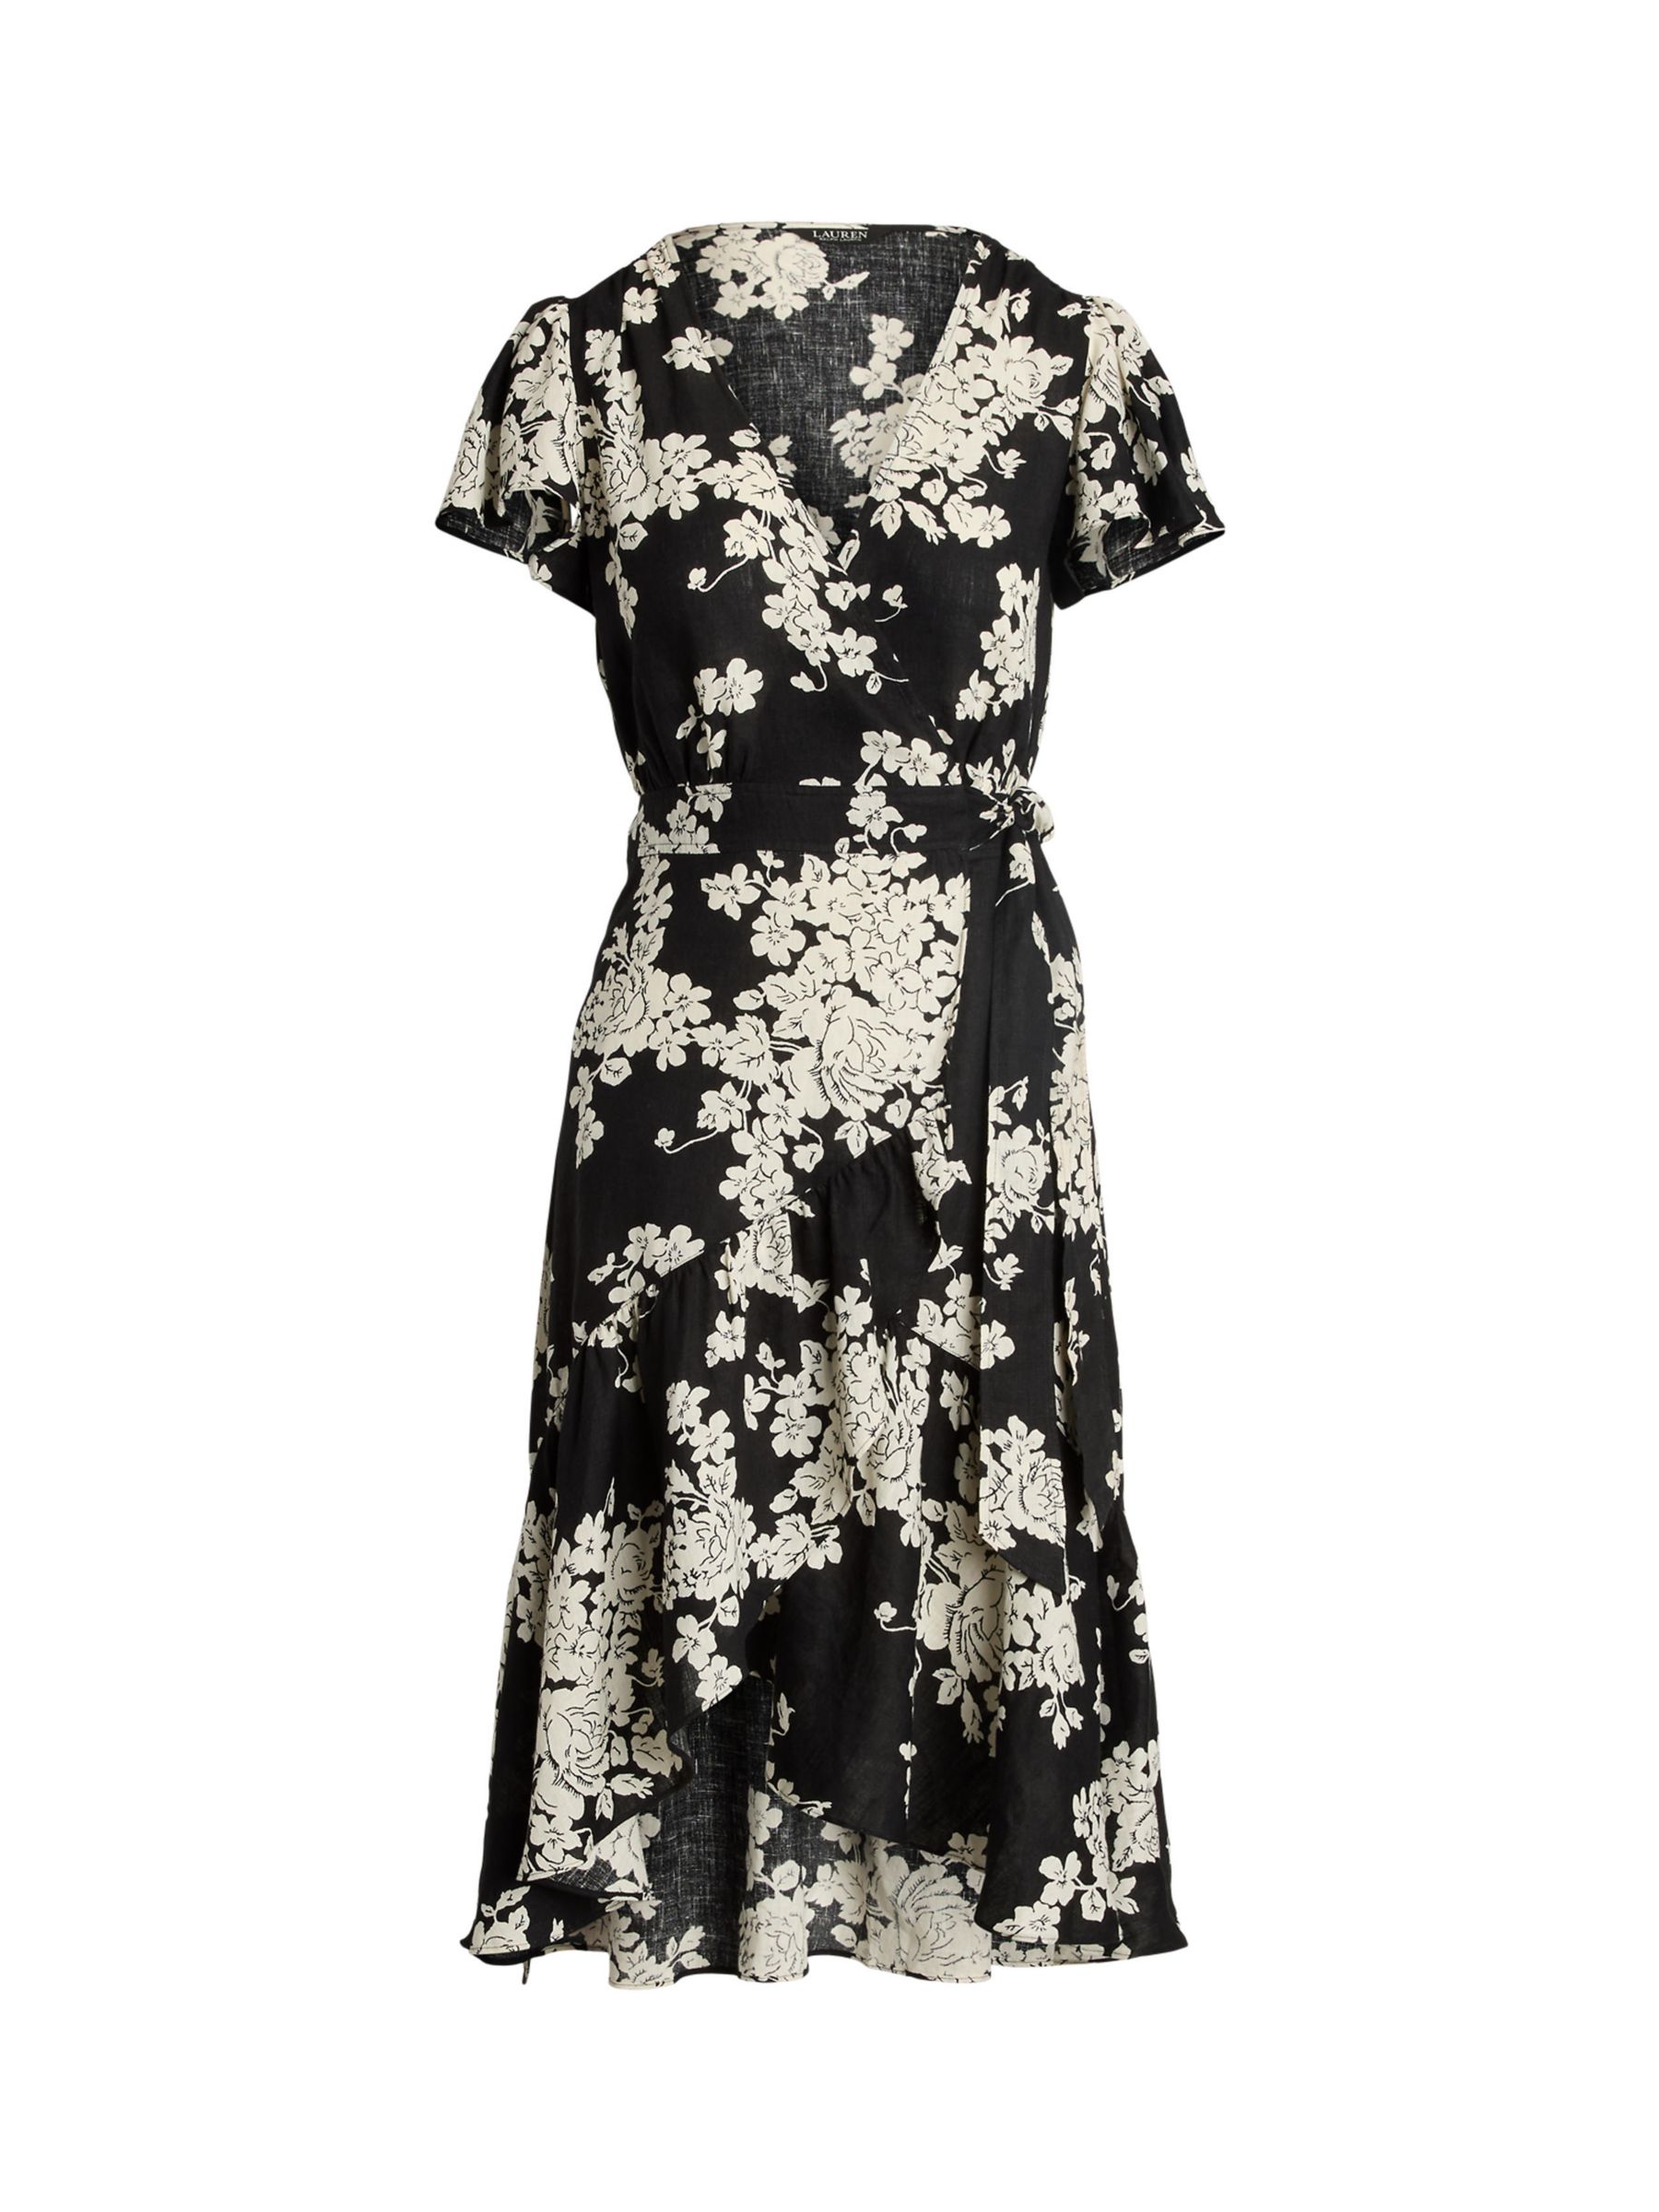 Lauren Ralph Lauren Belforette Rose Print Wrap Dress, Black/Multi, 10